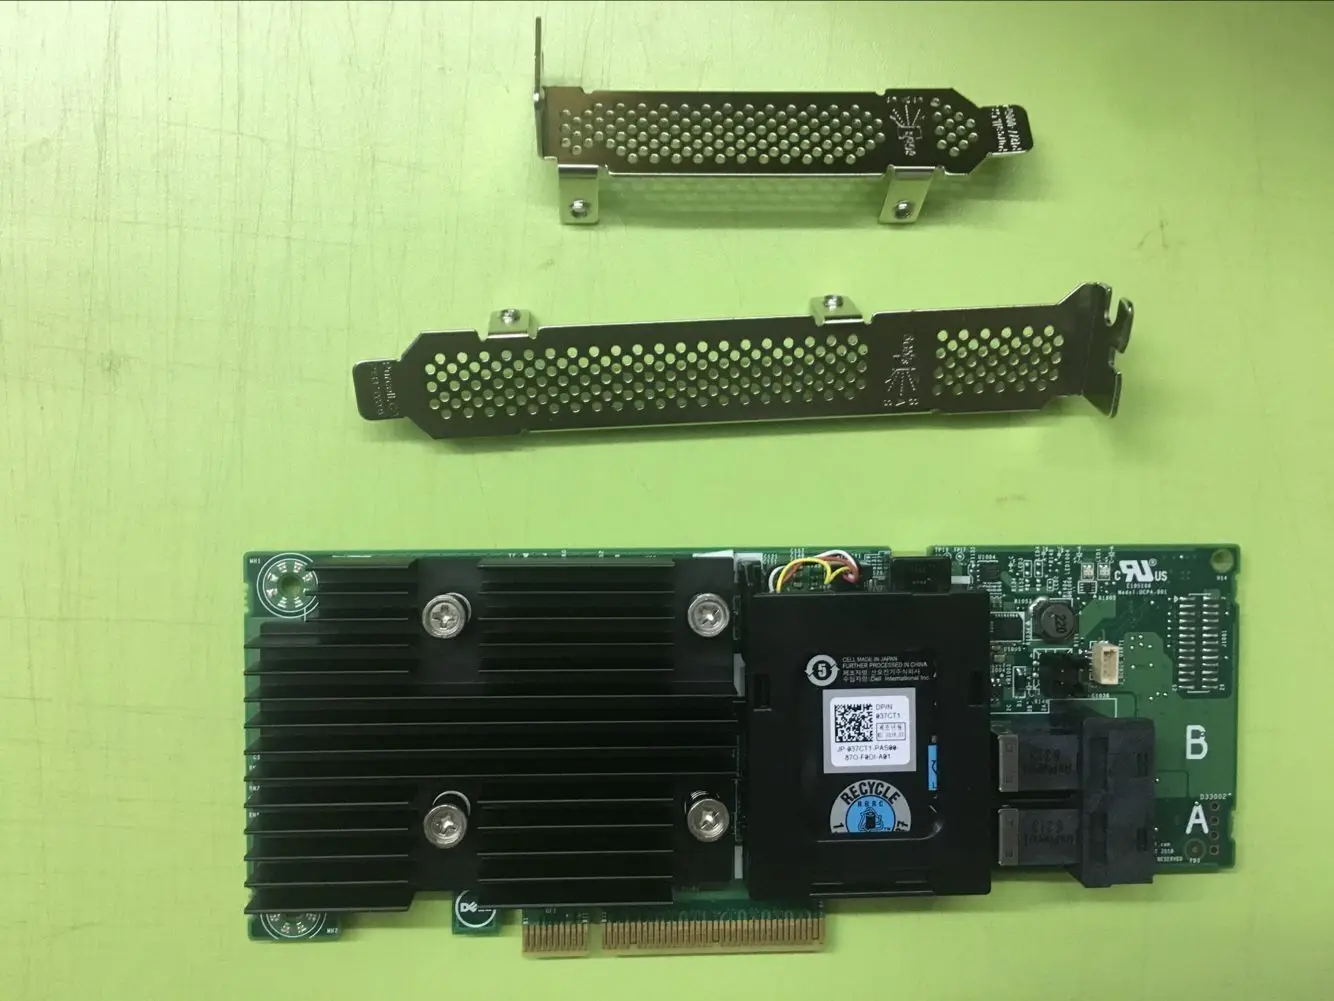 DELL PERC H730P 2GB NV PCI RAID T430 T640 R640 R940 POWEREDGE СЕРВЕР J14DC H132V